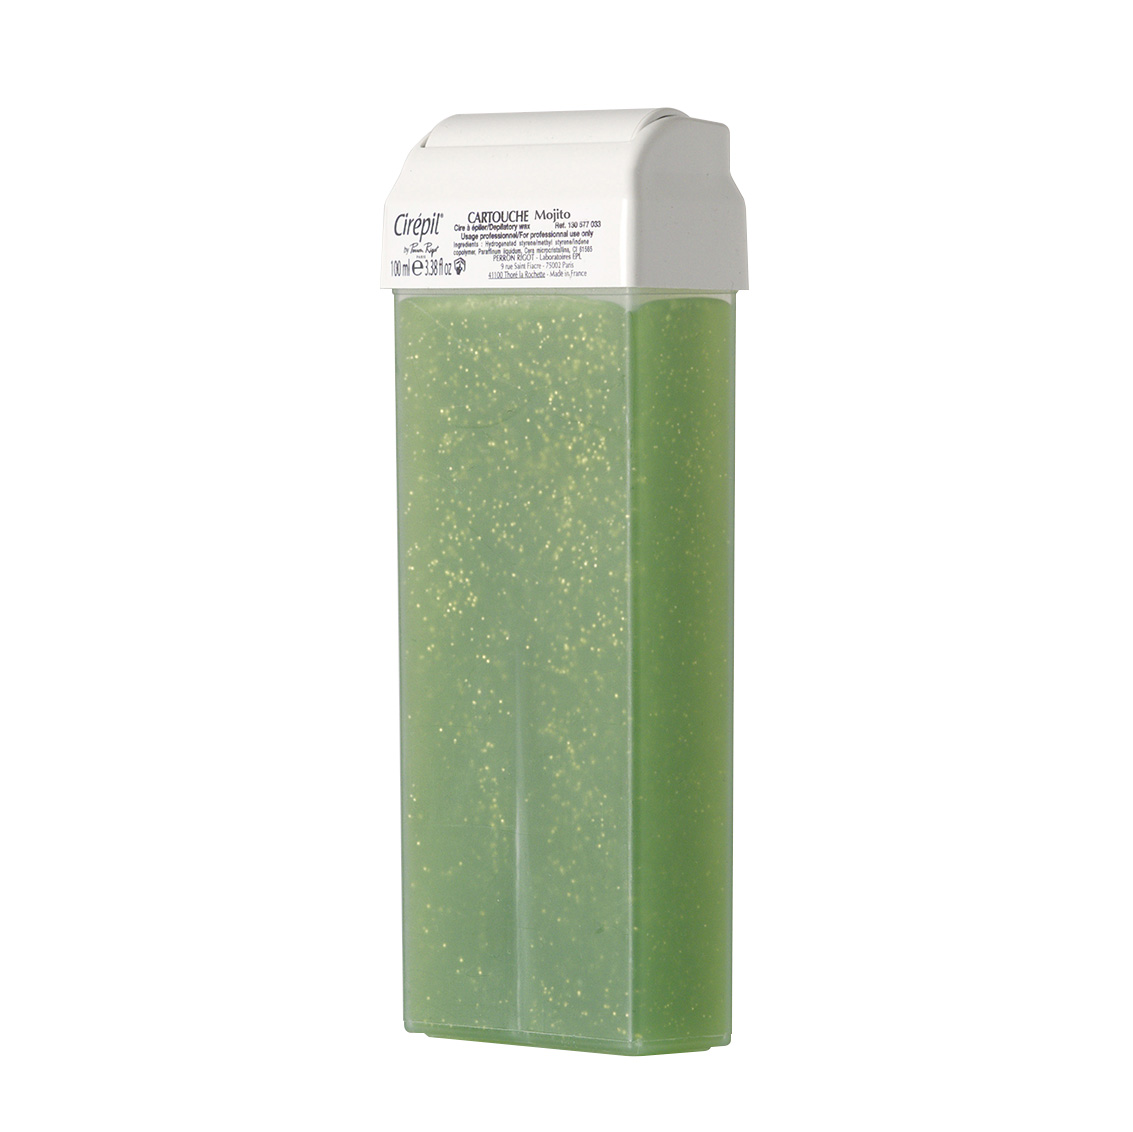 Mojito wax cartridges 36 pcs - Mint scented